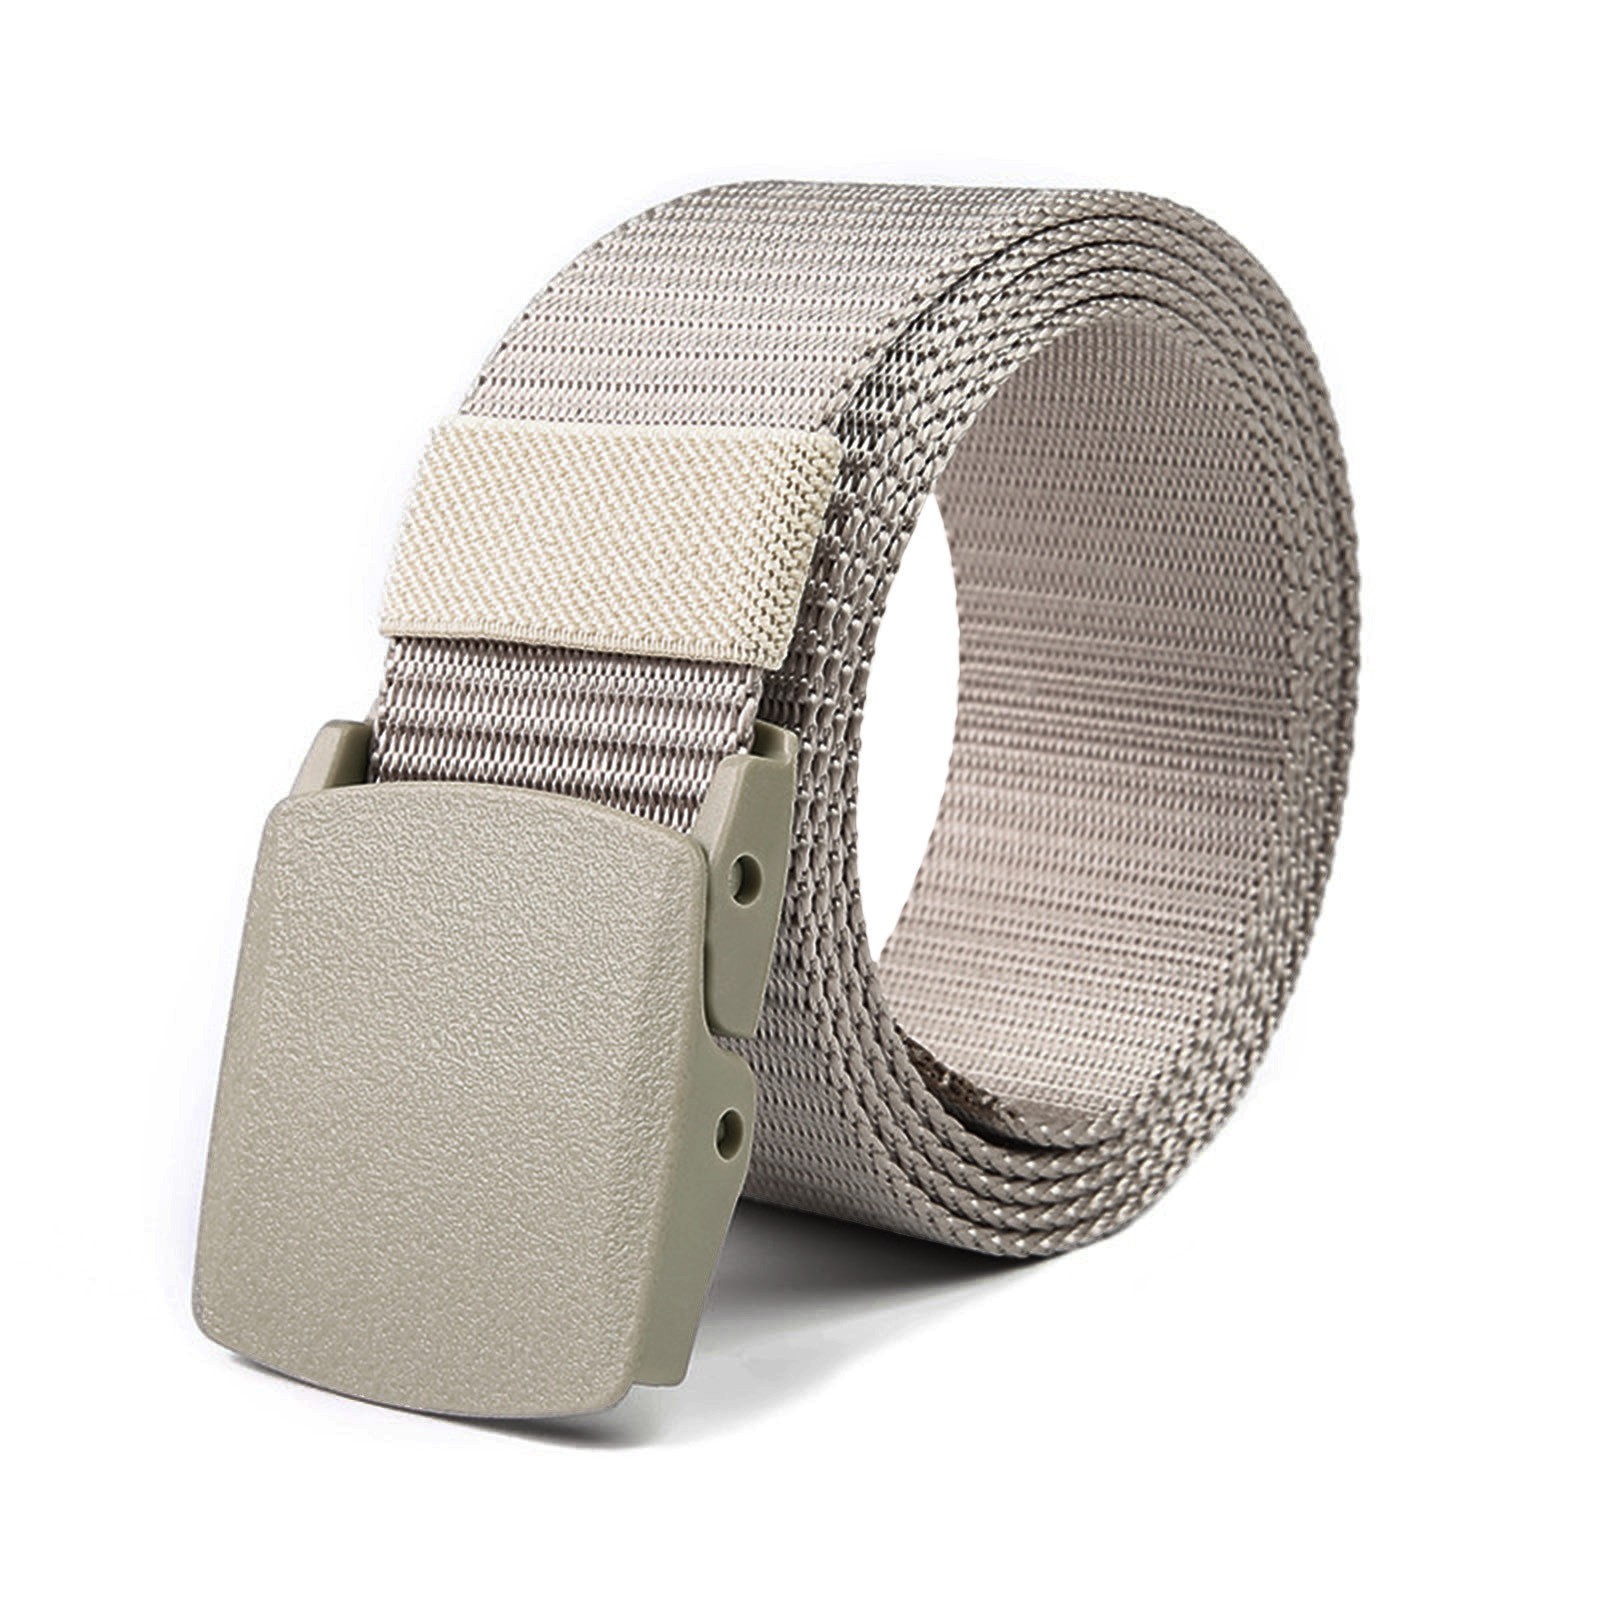 Yubnlvae Belts for Women Mens Adult Unisex Canvas Quick Release Buckle Outer Belt Men's Outdoor Training Belt Belt Beige - image 2 of 3